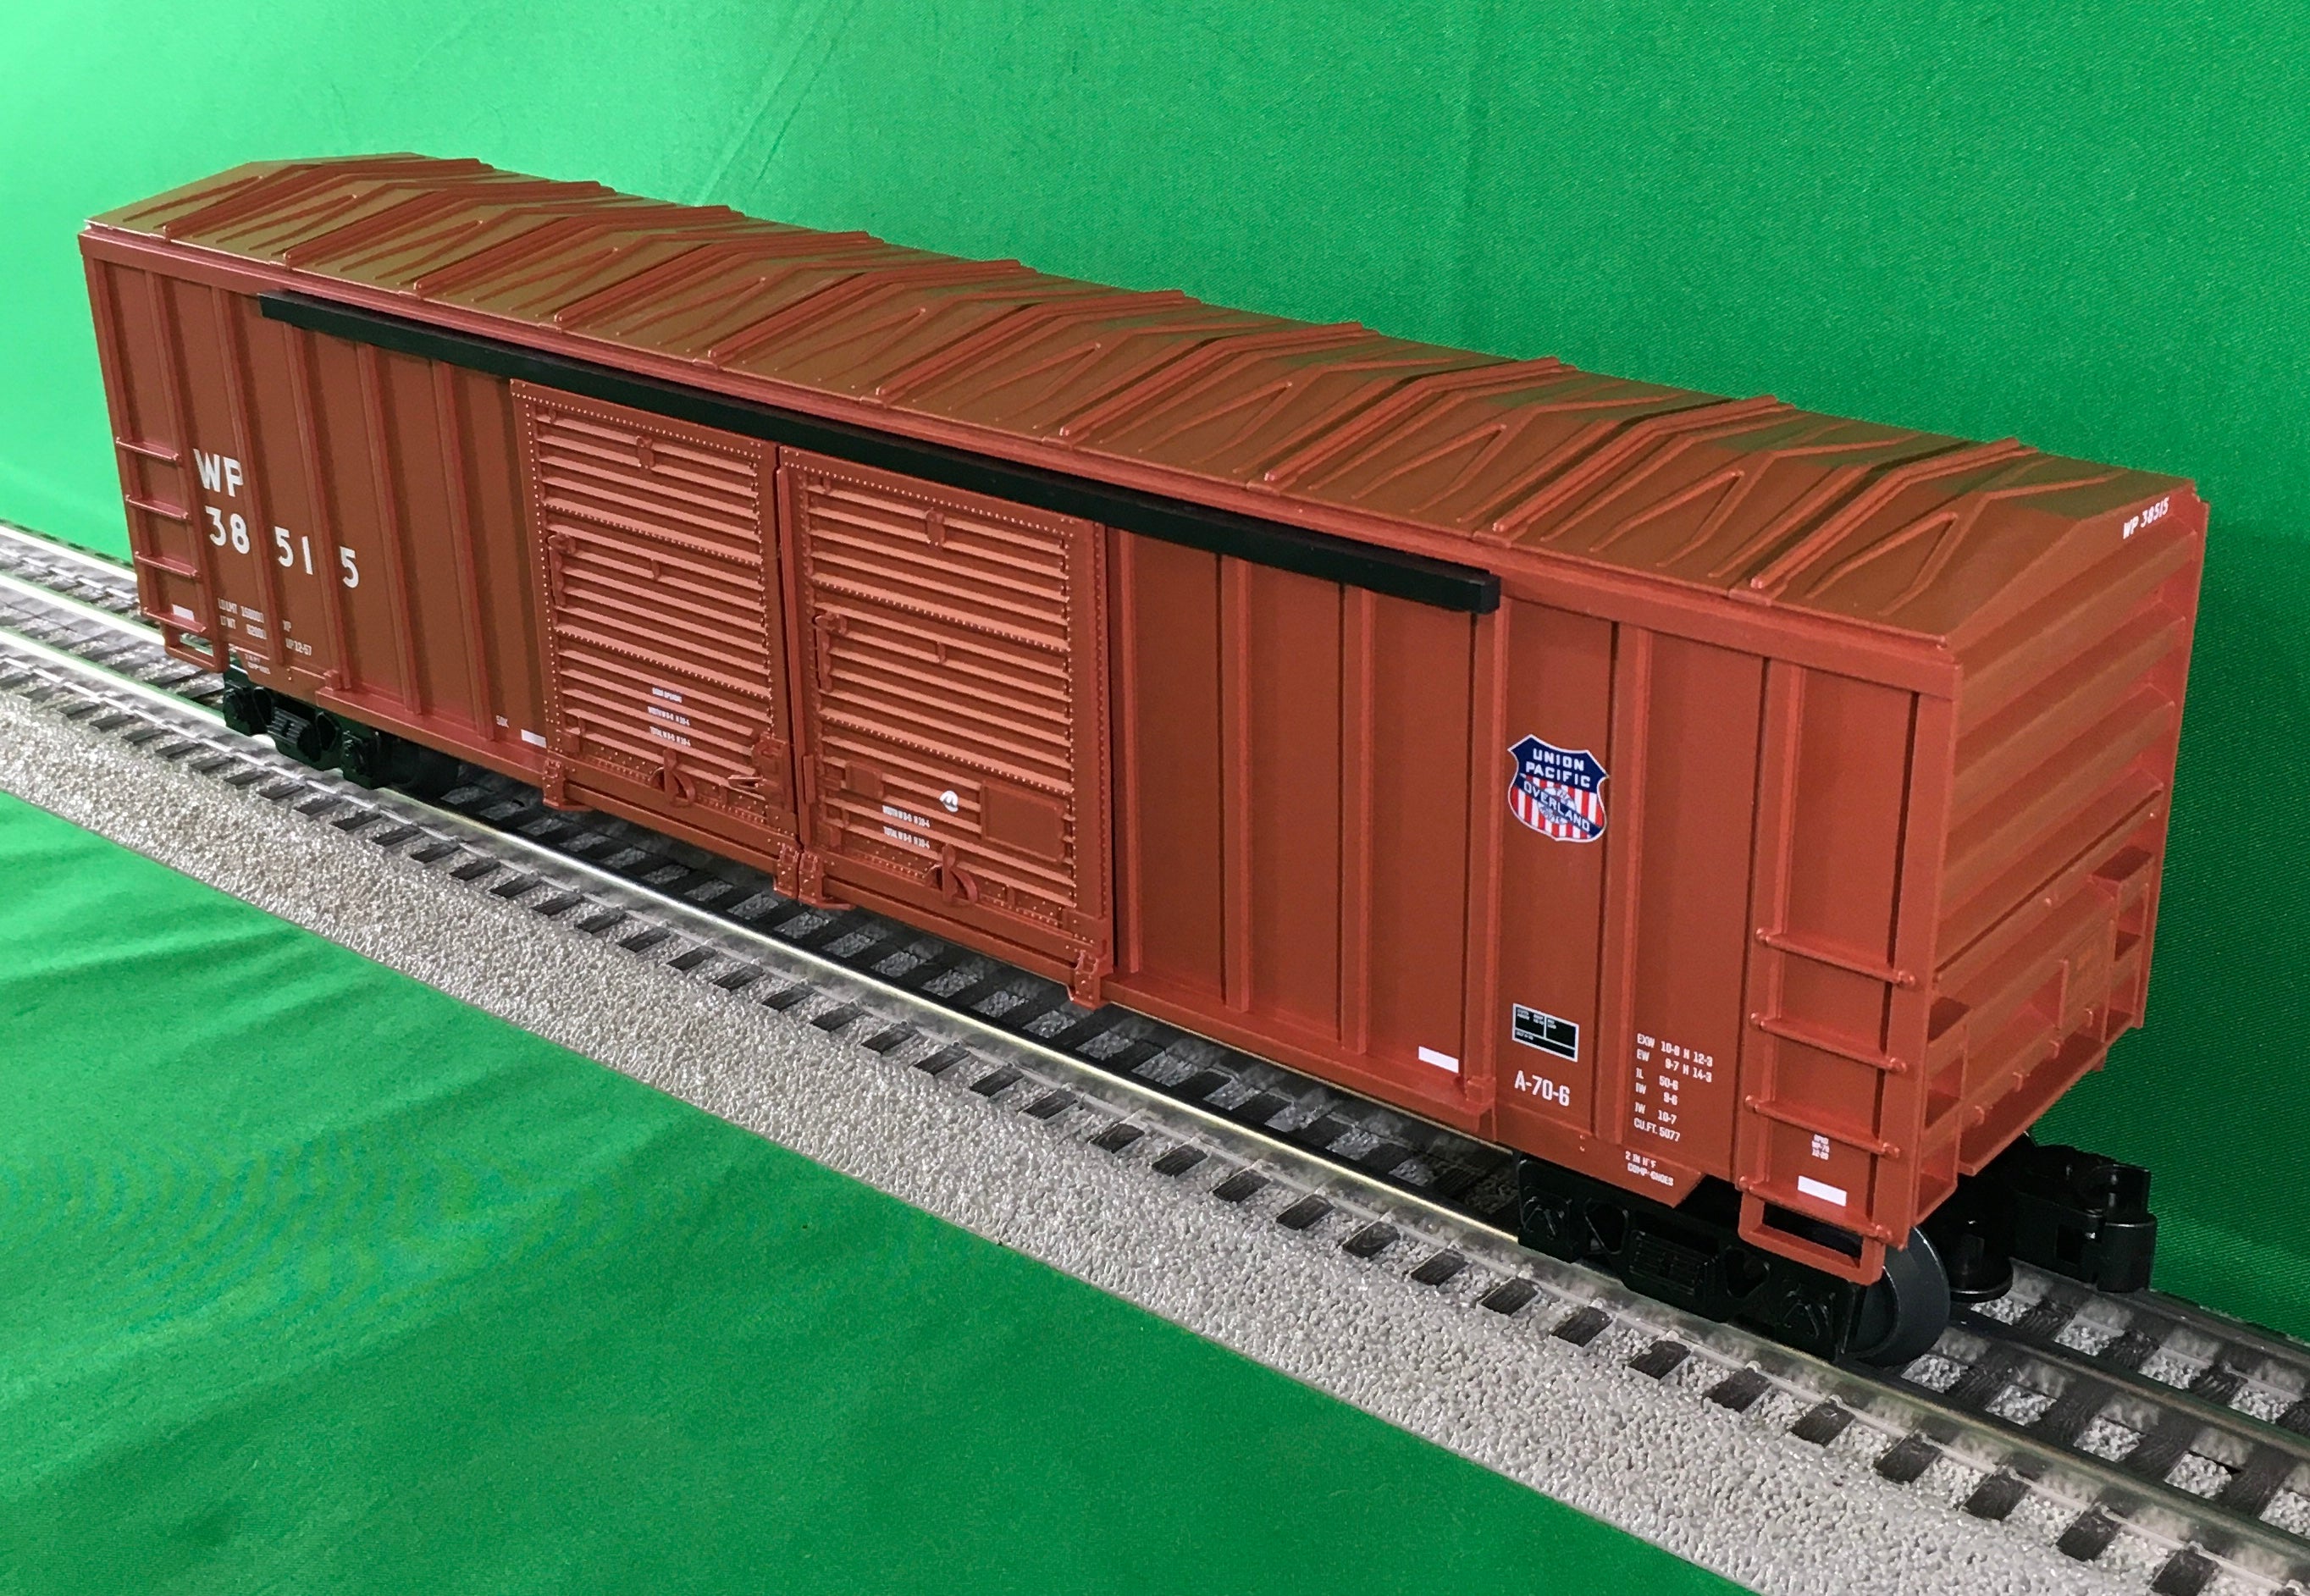 Lionel 2443022 - Double Door Boxcar "Union Pacific" #38515